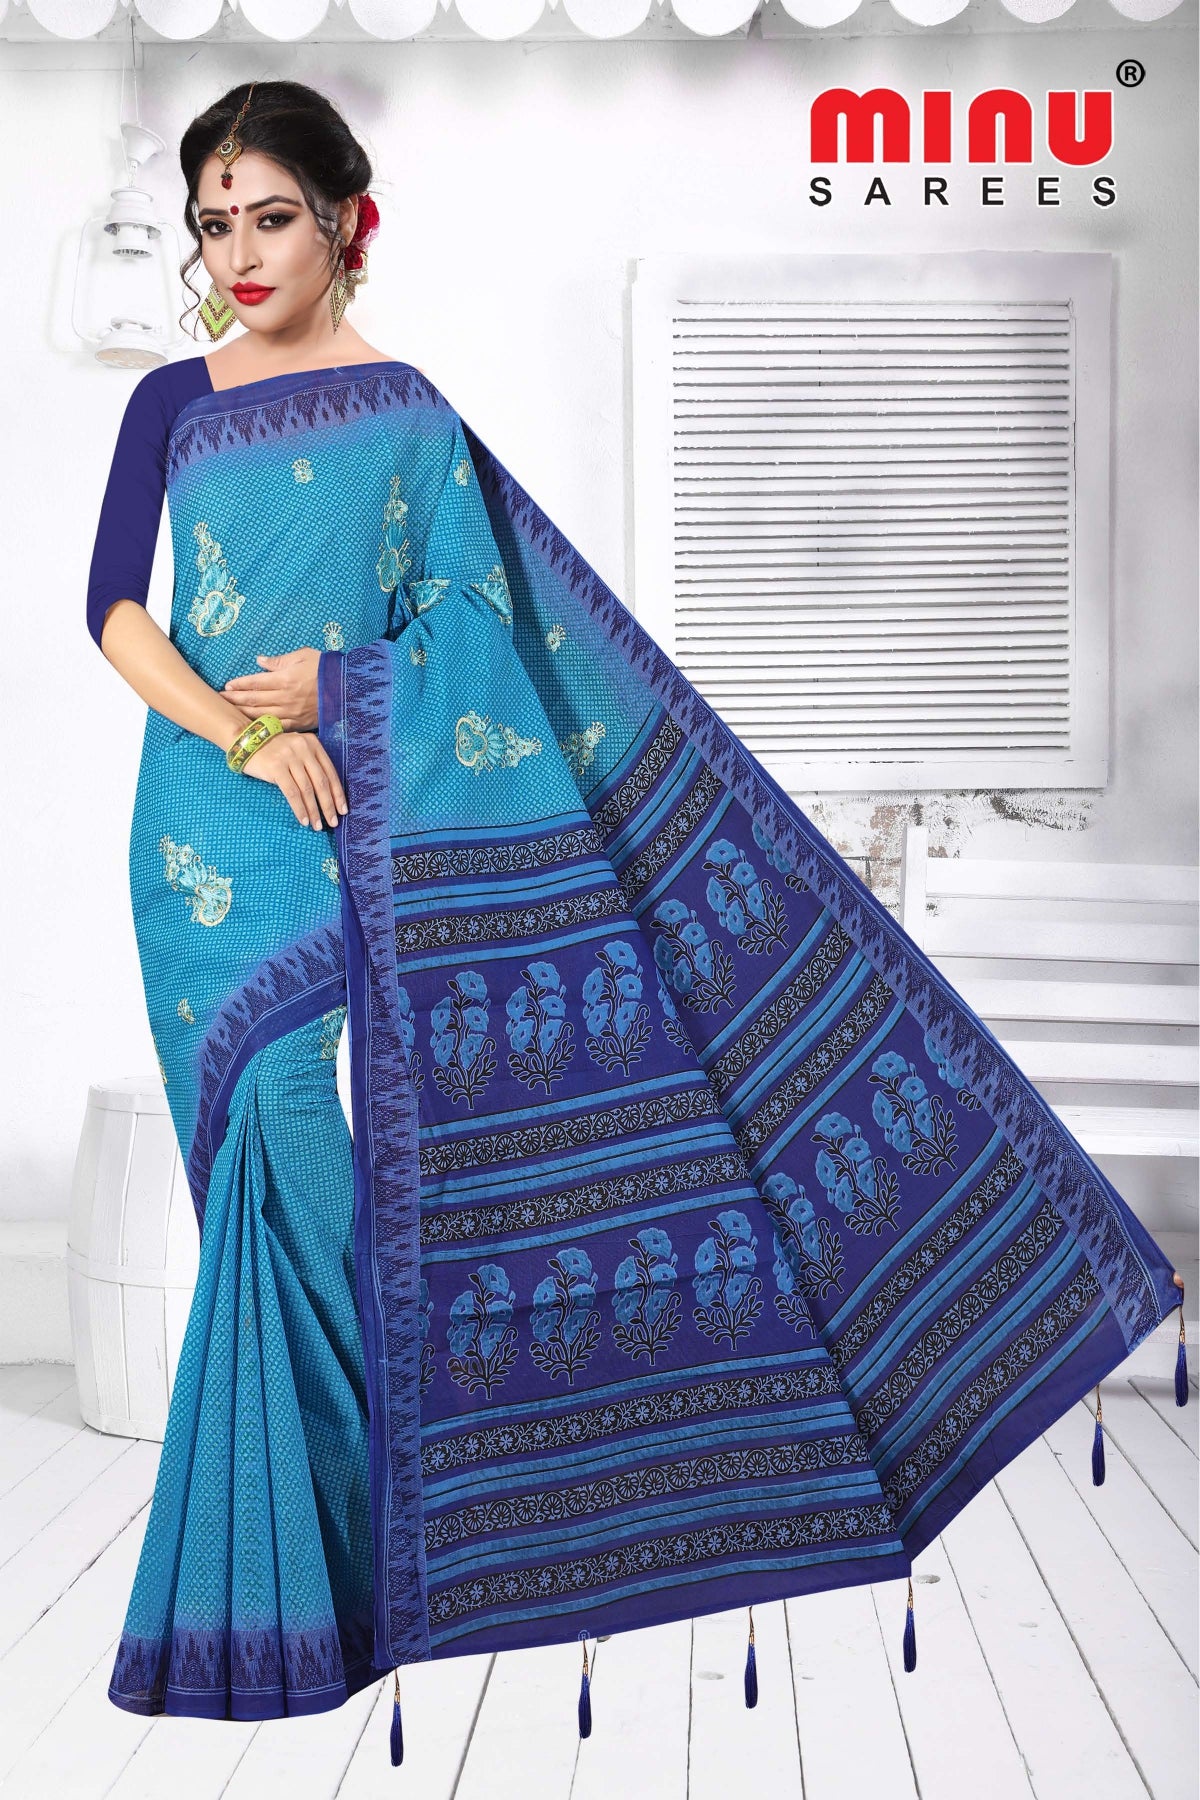 trendy cotton saree wearing woman